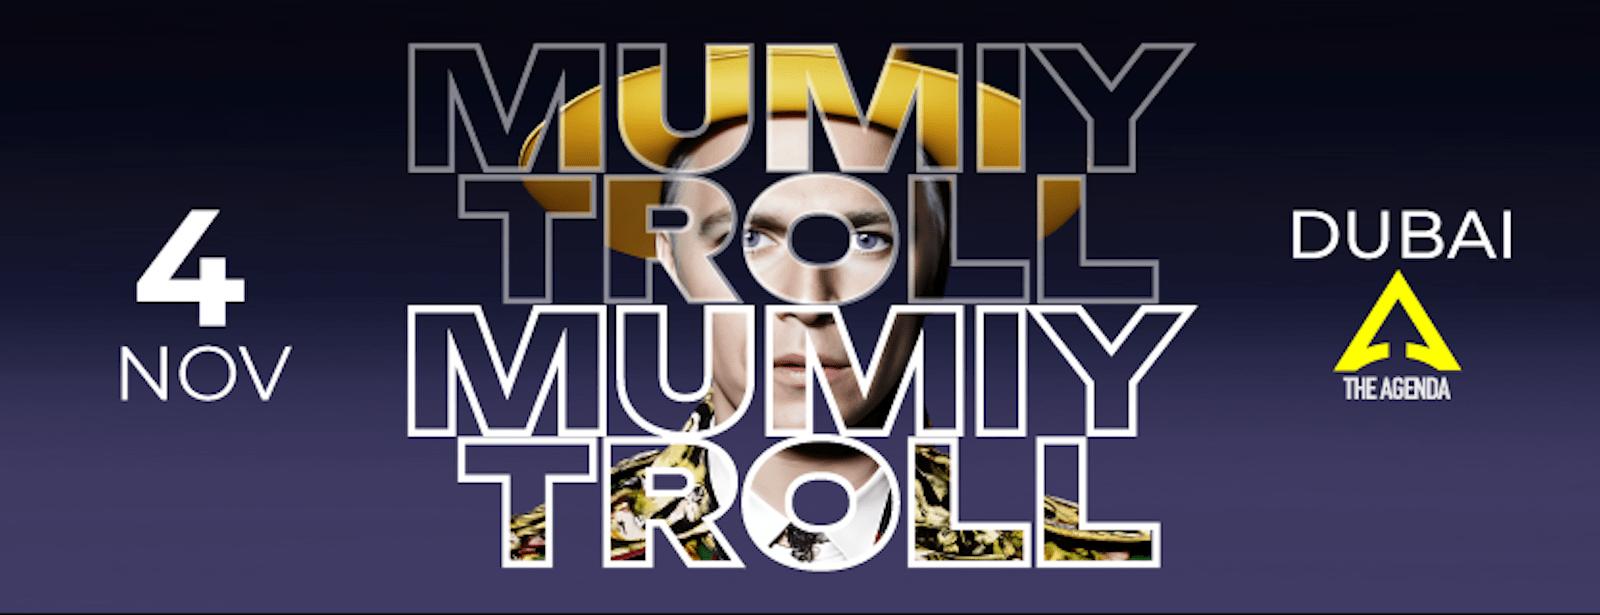 Mumiy Troll / Мумий Тролль Live at The Agenda, Dubai - Coming Soon in UAE